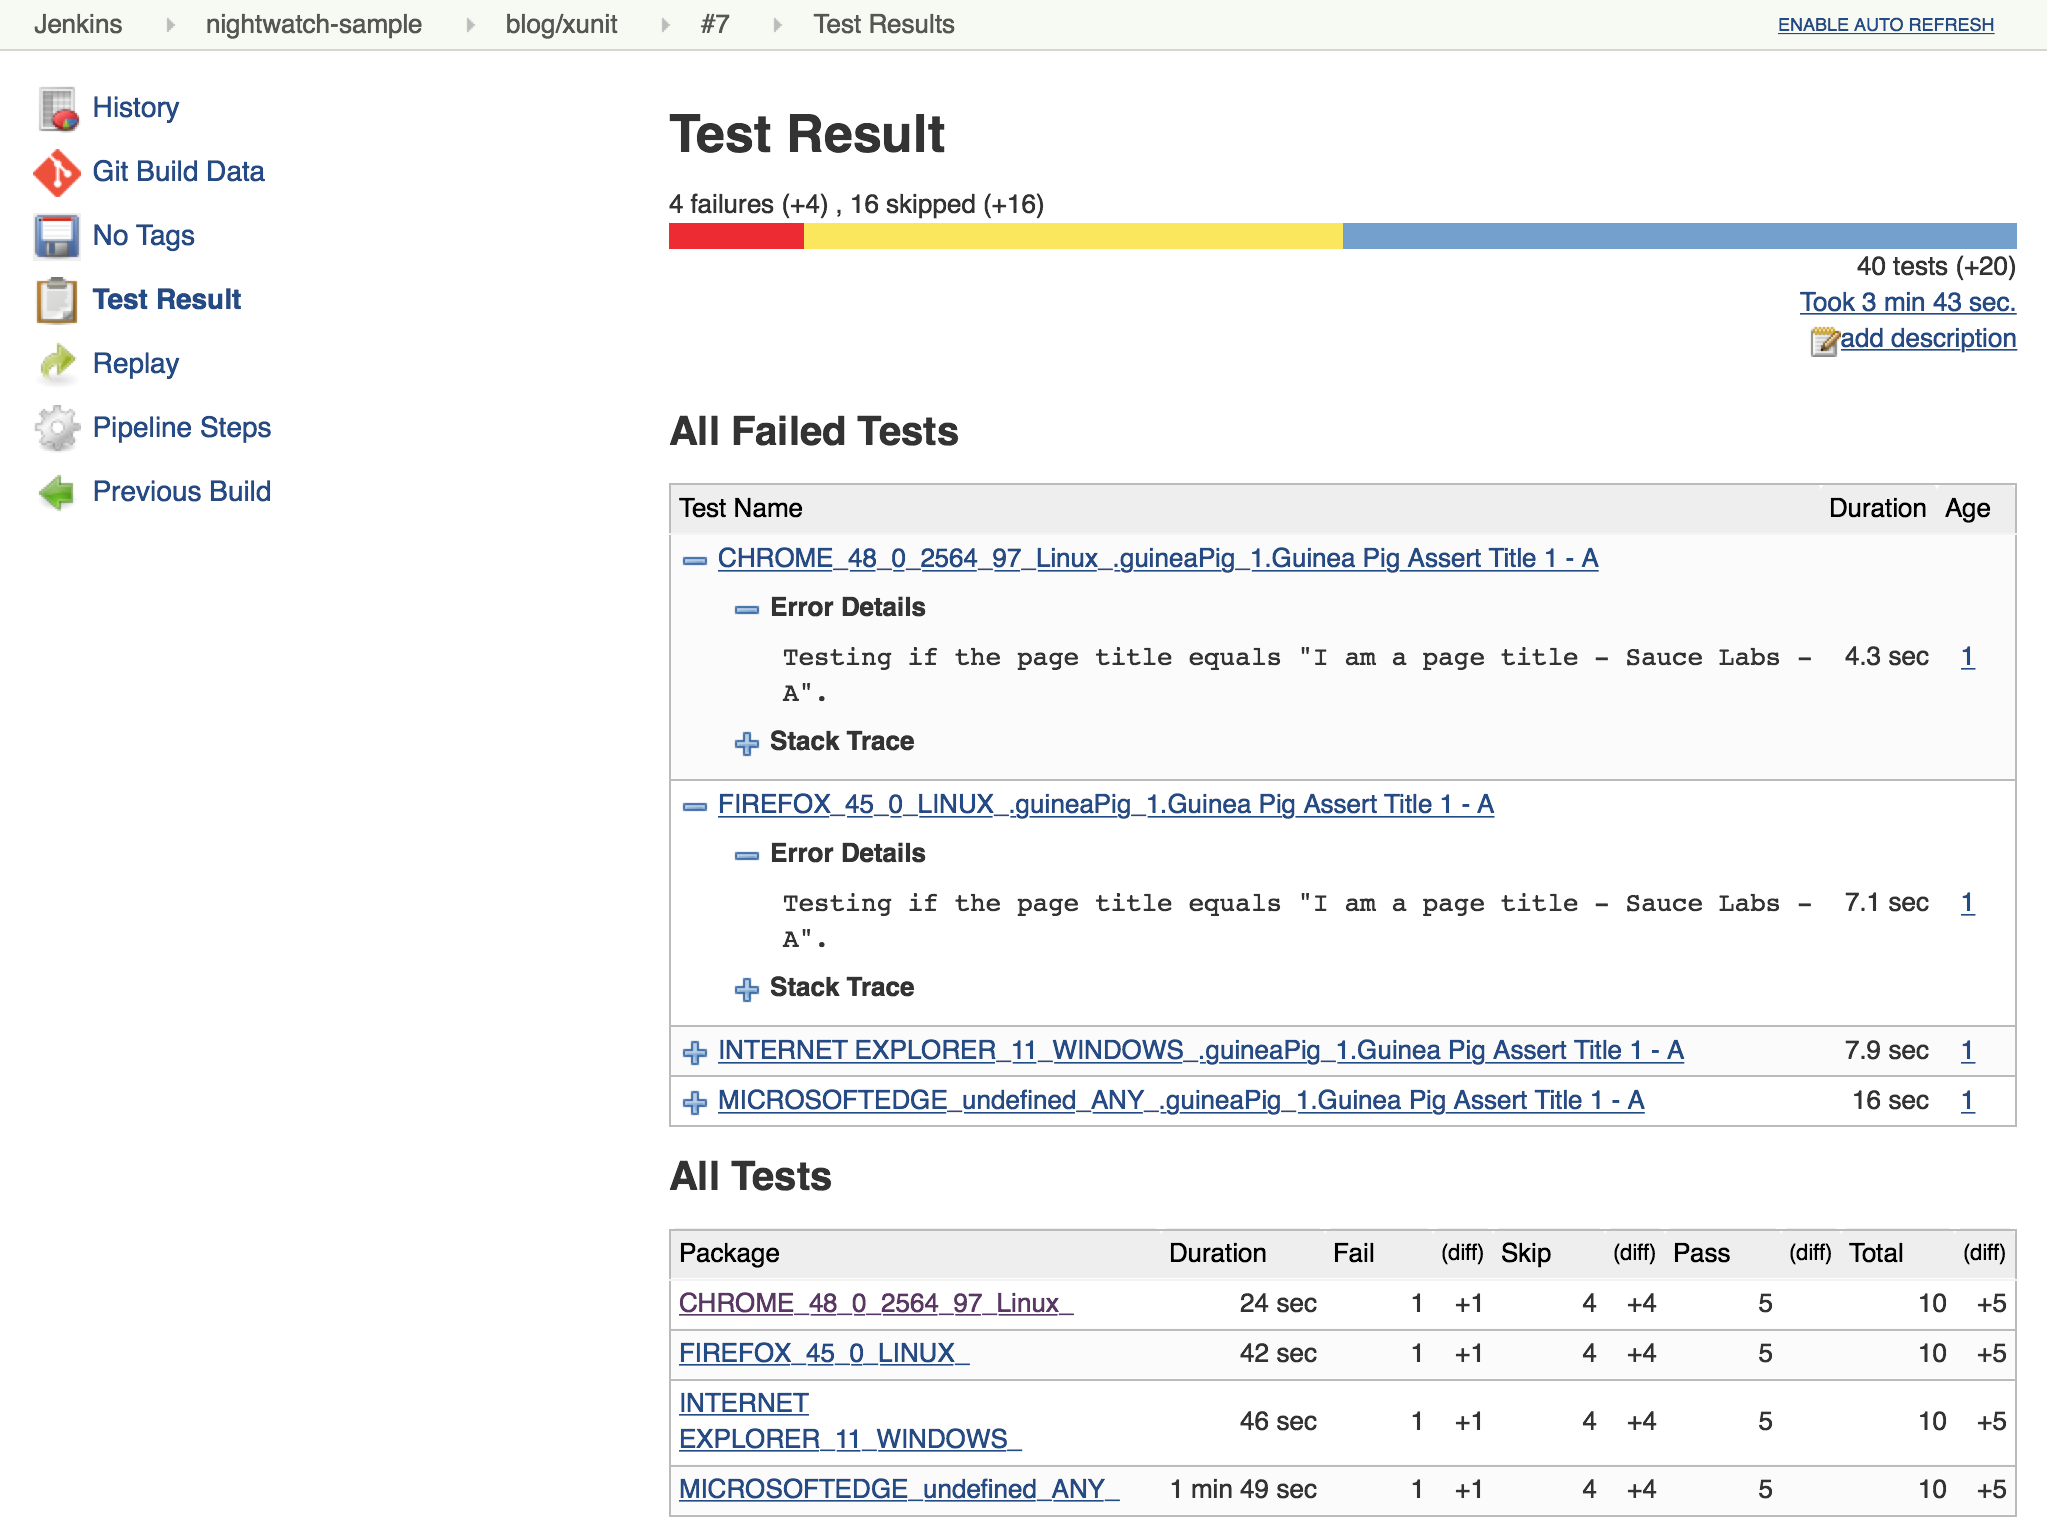 Screenshot of Jenkins job report showing detailed test results